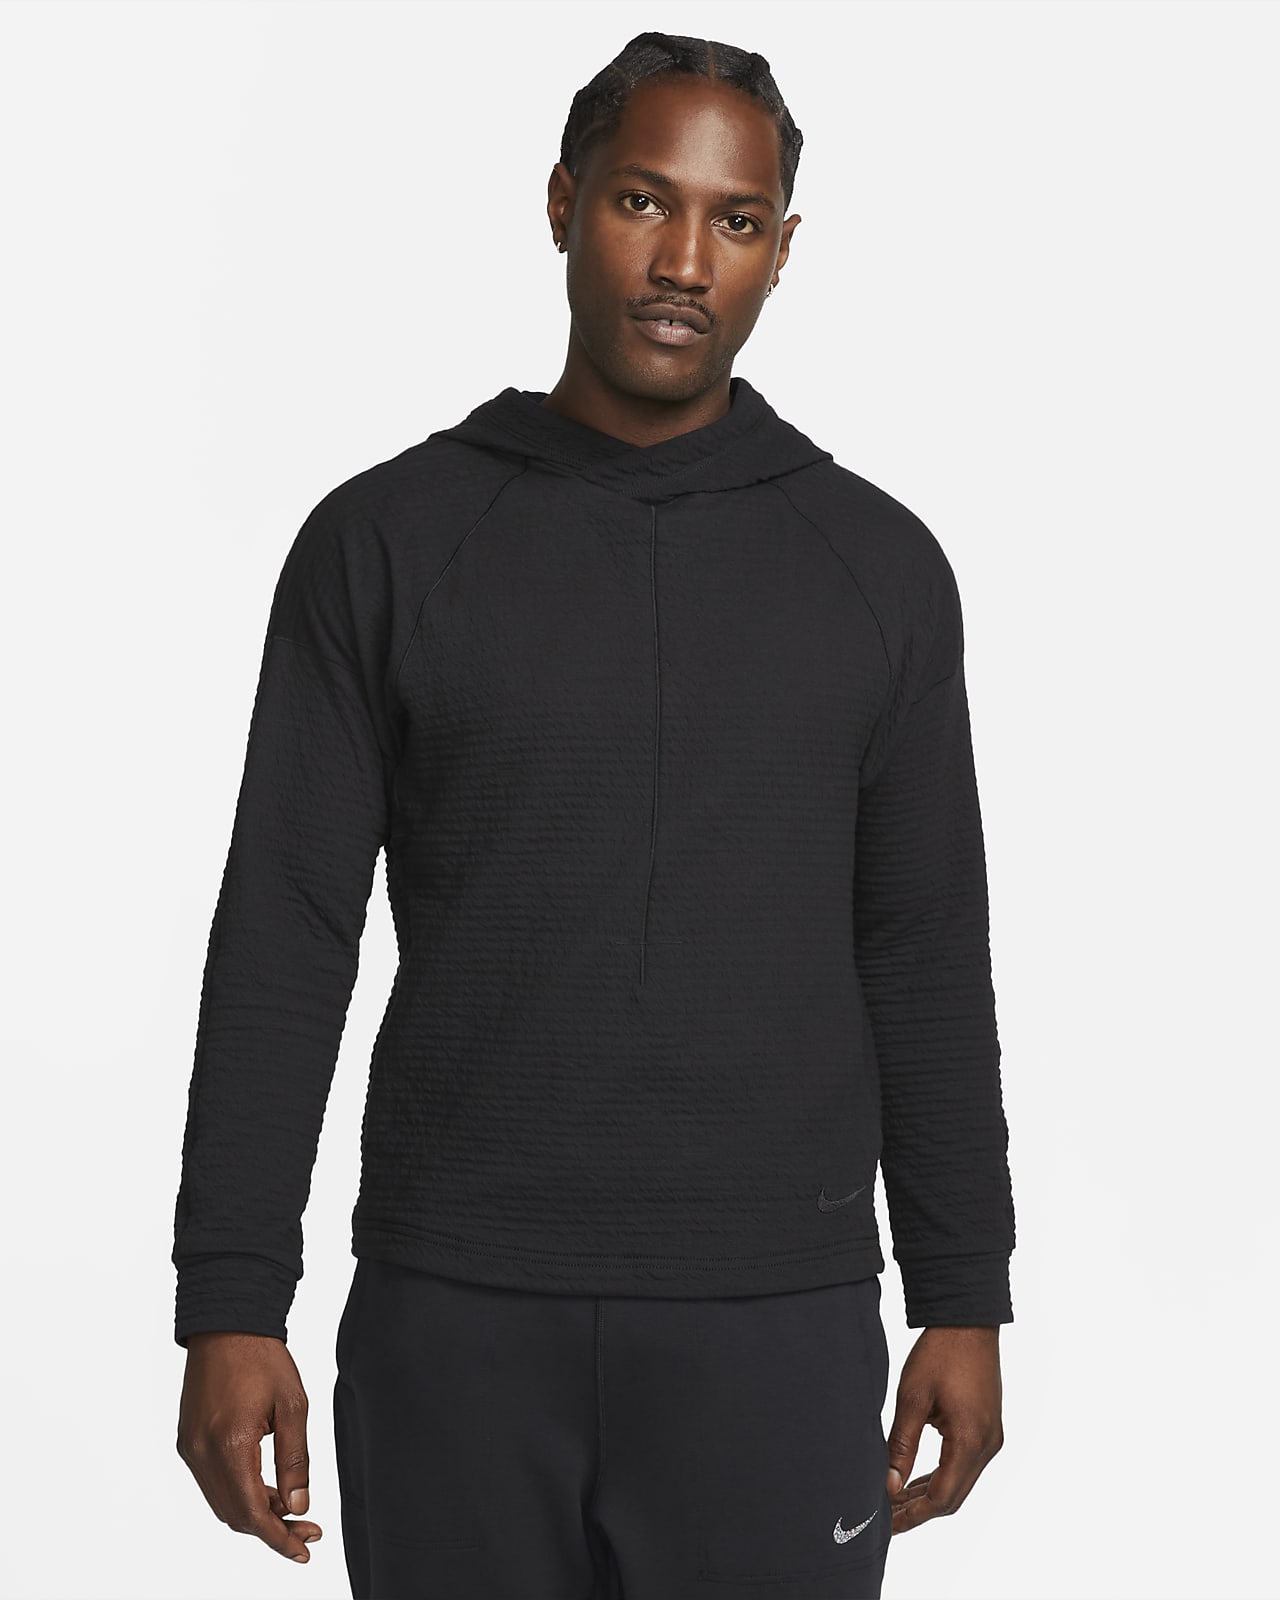 Nike Yoga Men's Dri-FIT Sweatshirt